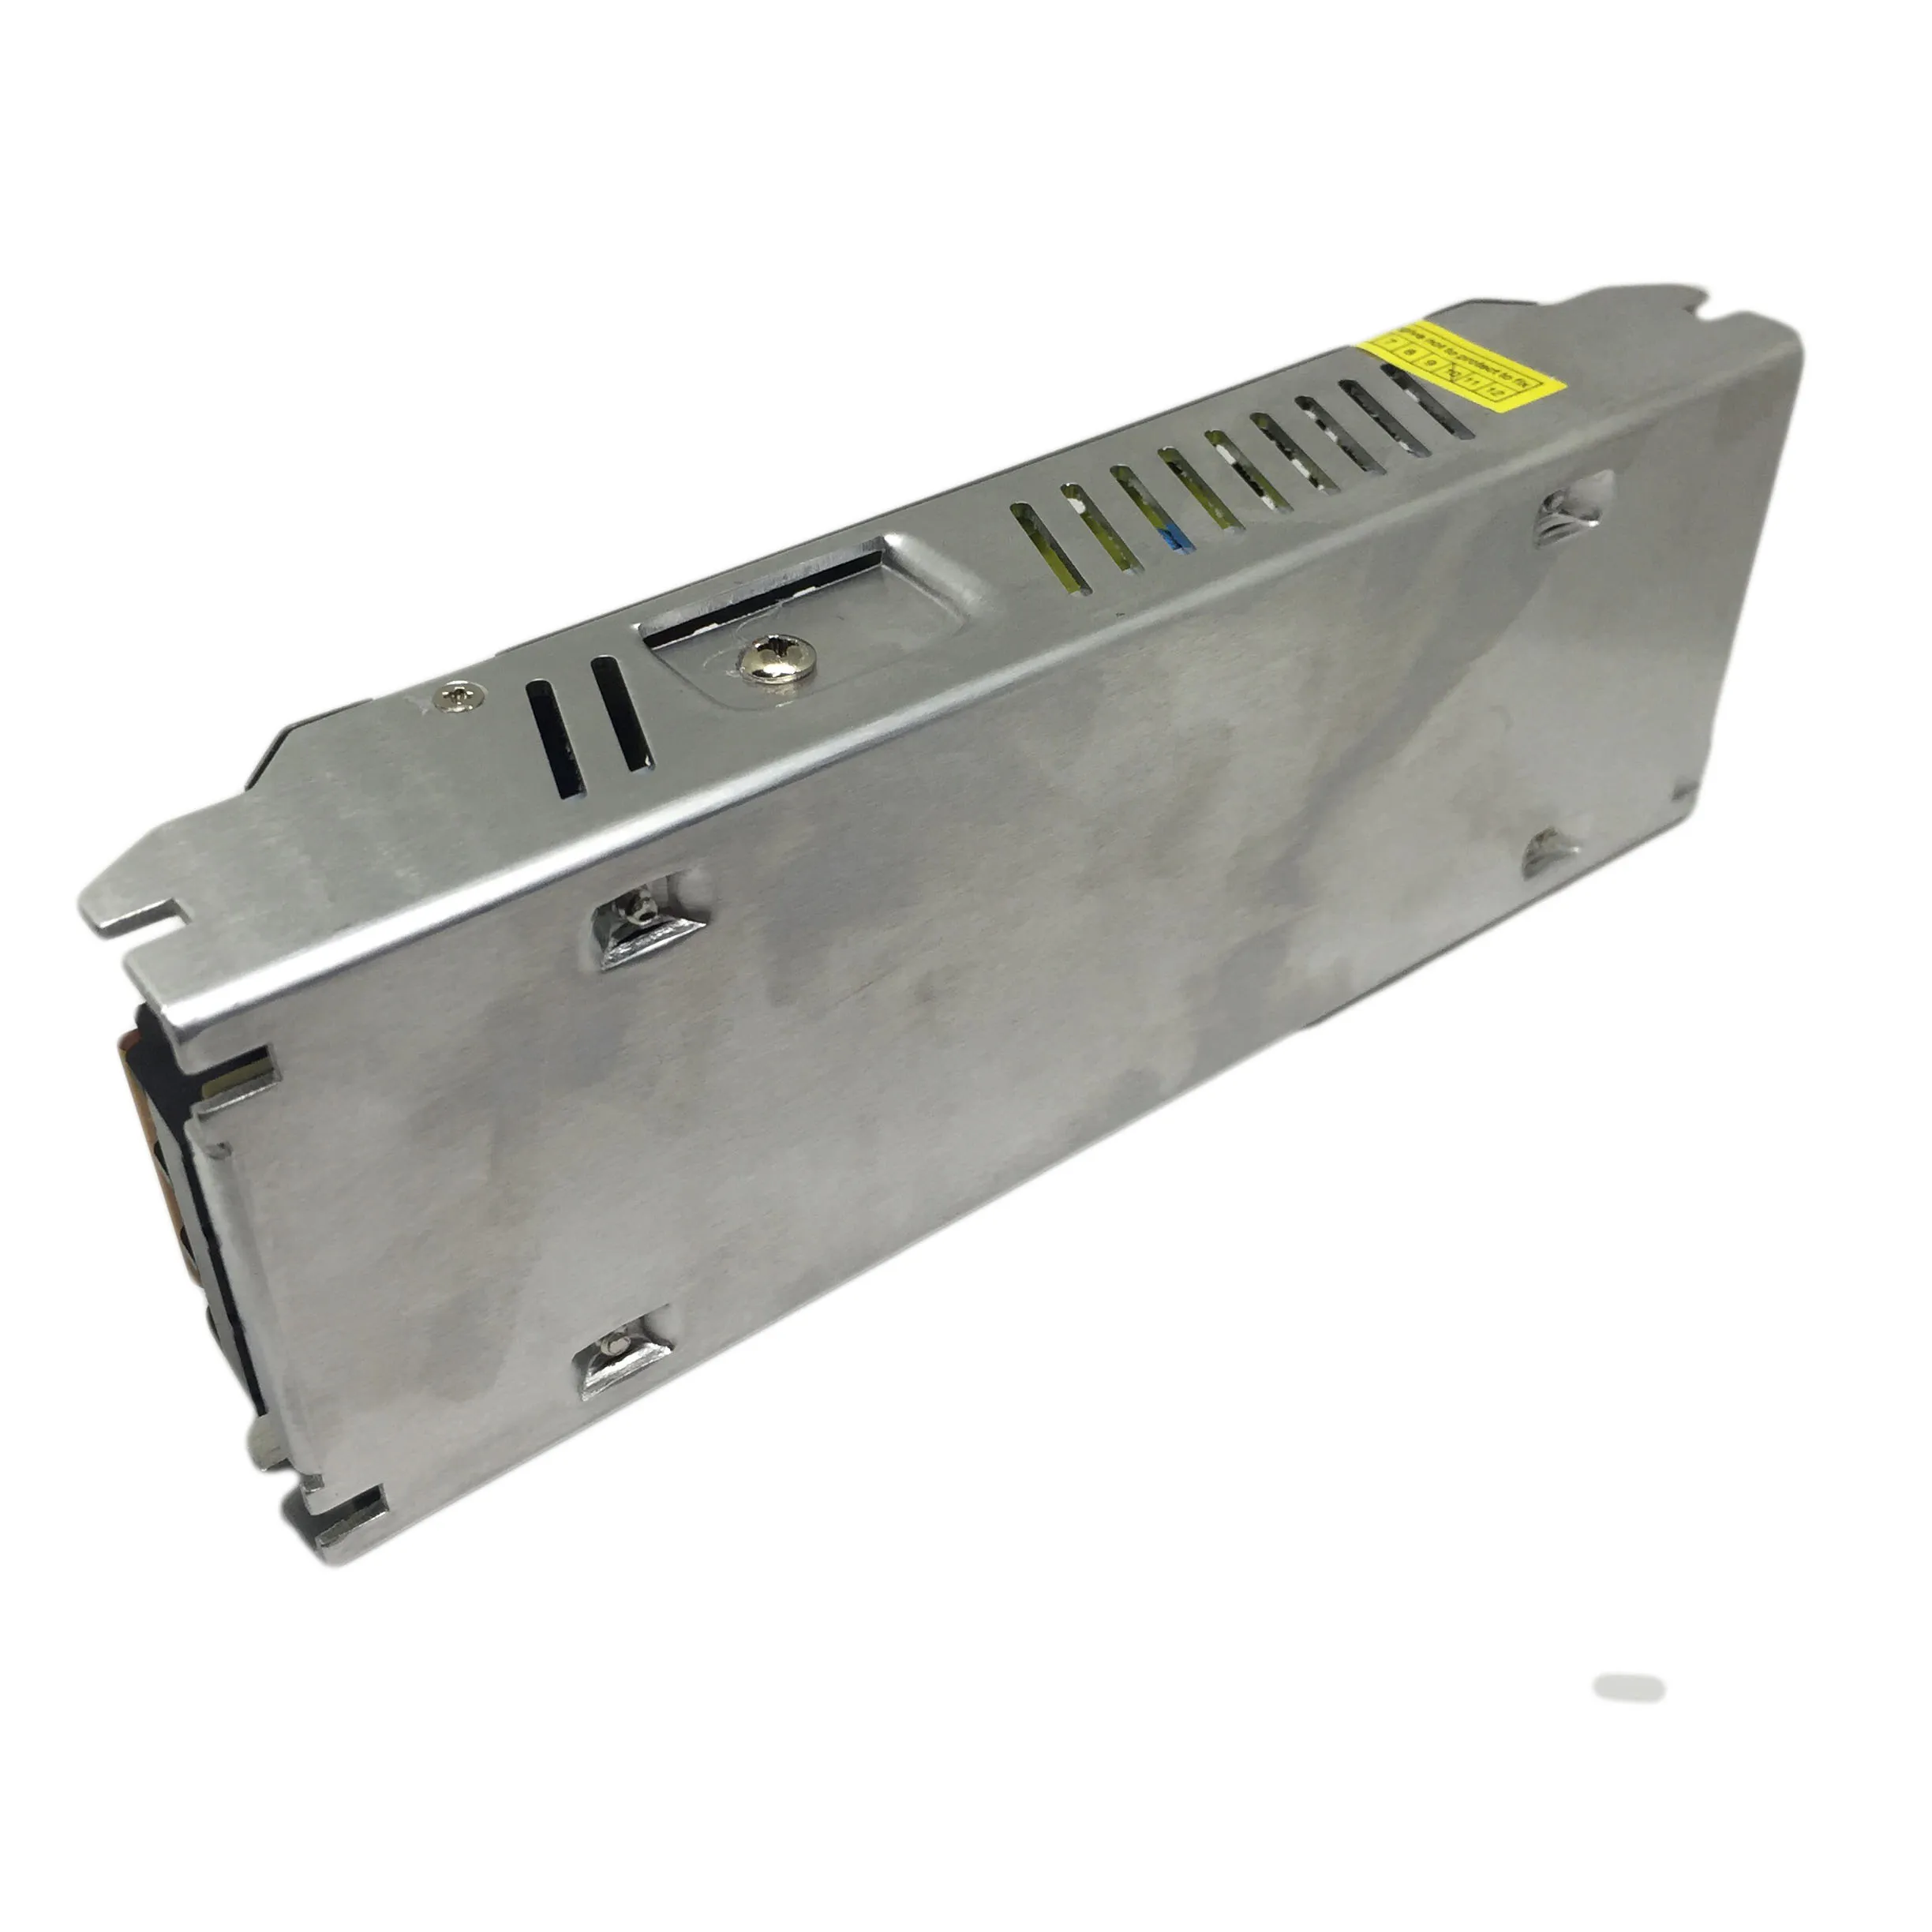 SANPU 200W DC12V 스위치 전원 공급 장치 AC-DC LED 조명 변압기 CL200-W1V12 울트라 씬 알루미늄 쉘 16.5A 드라이버